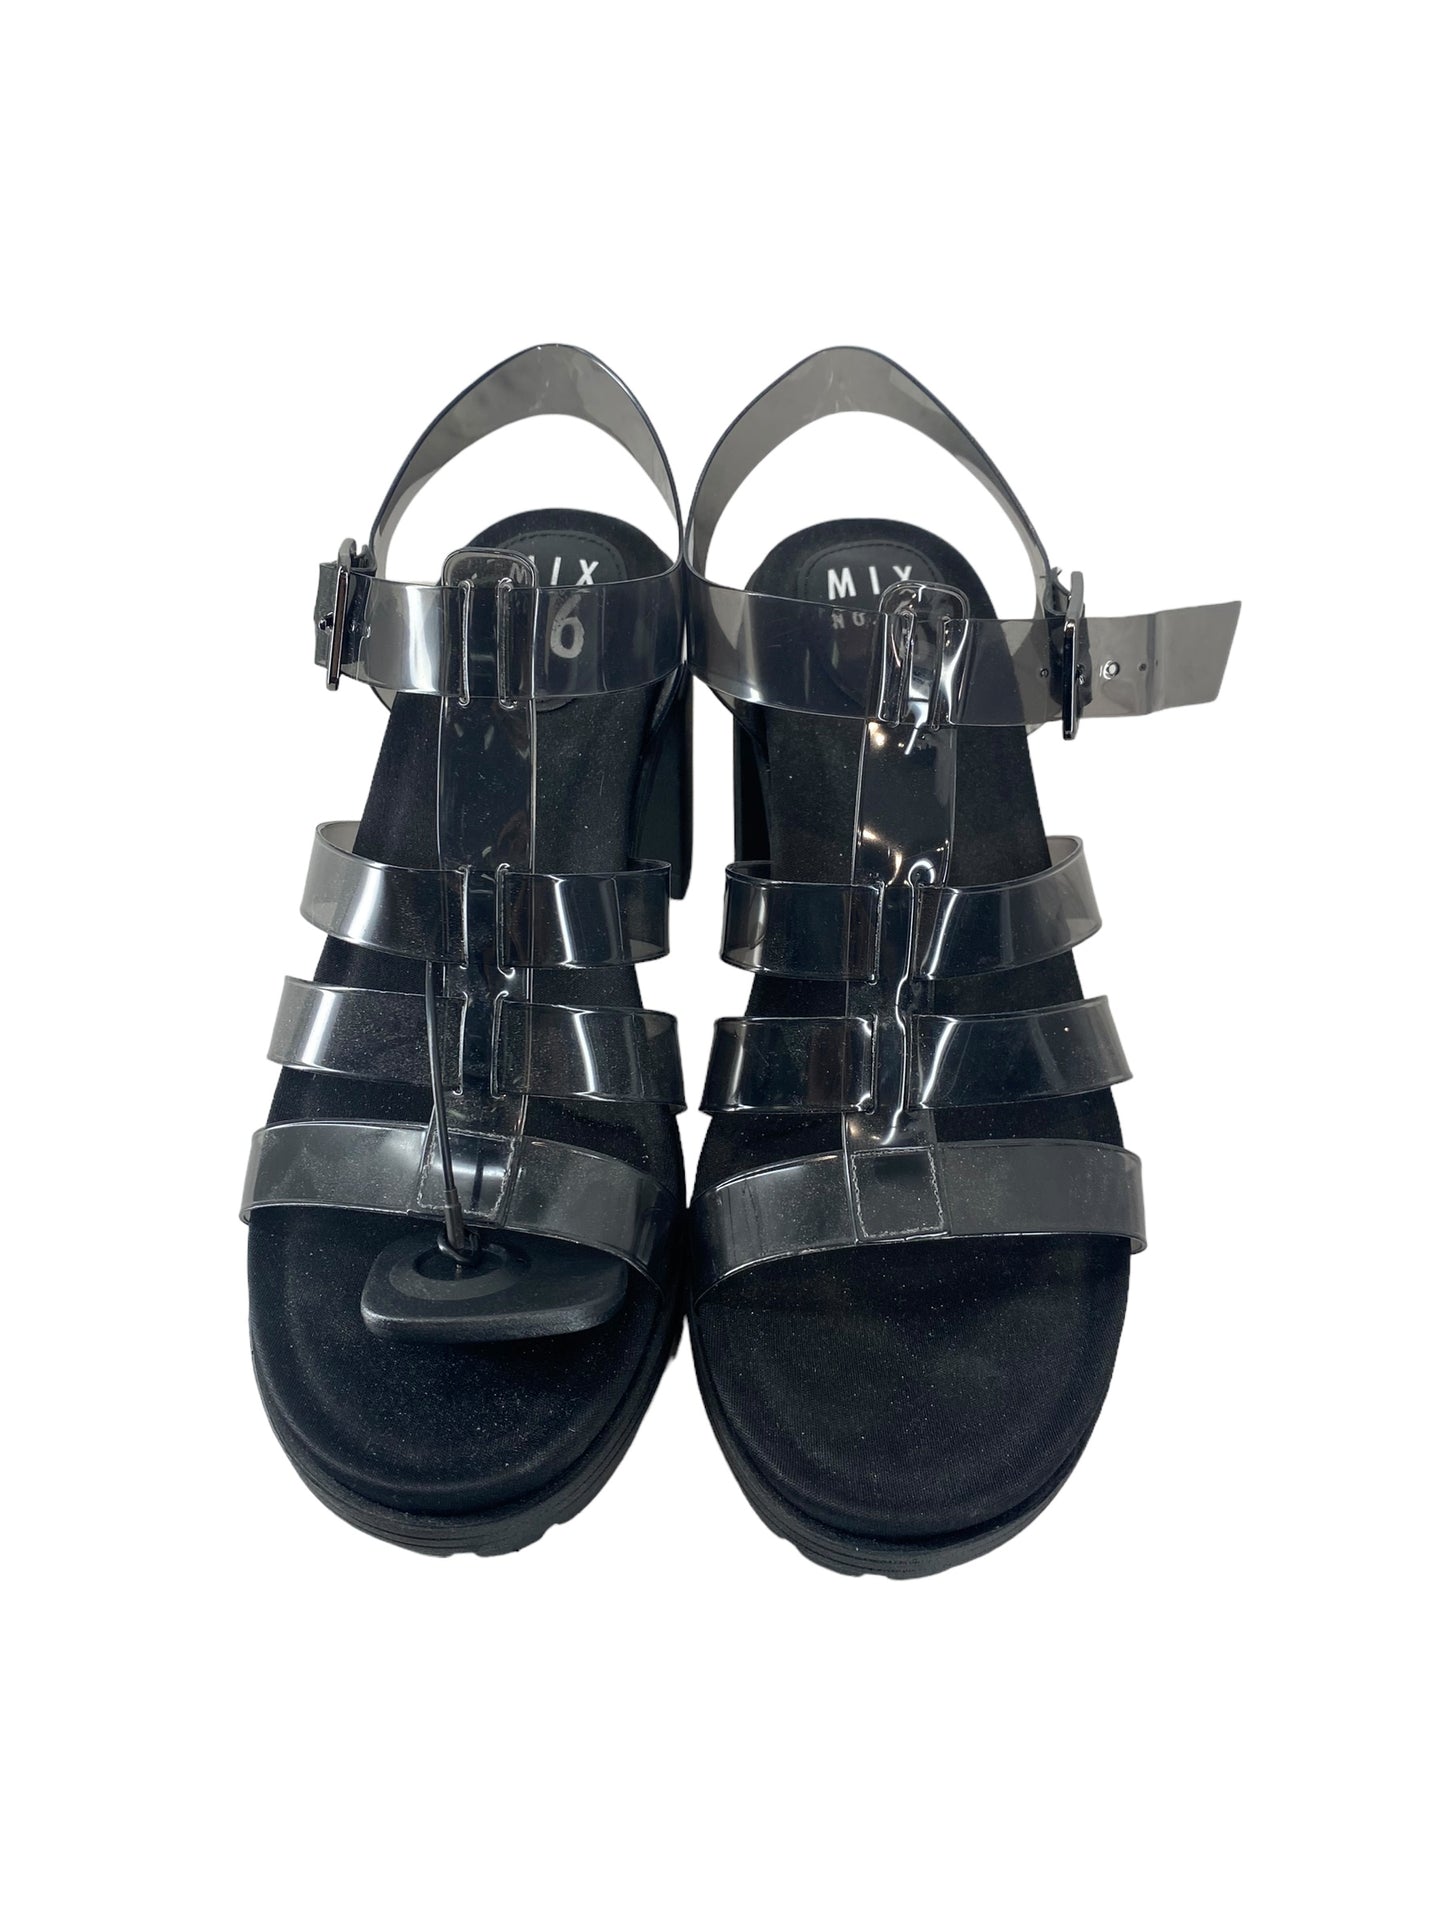 Sandals Heels Block By Mix No 6  Size: 6.5